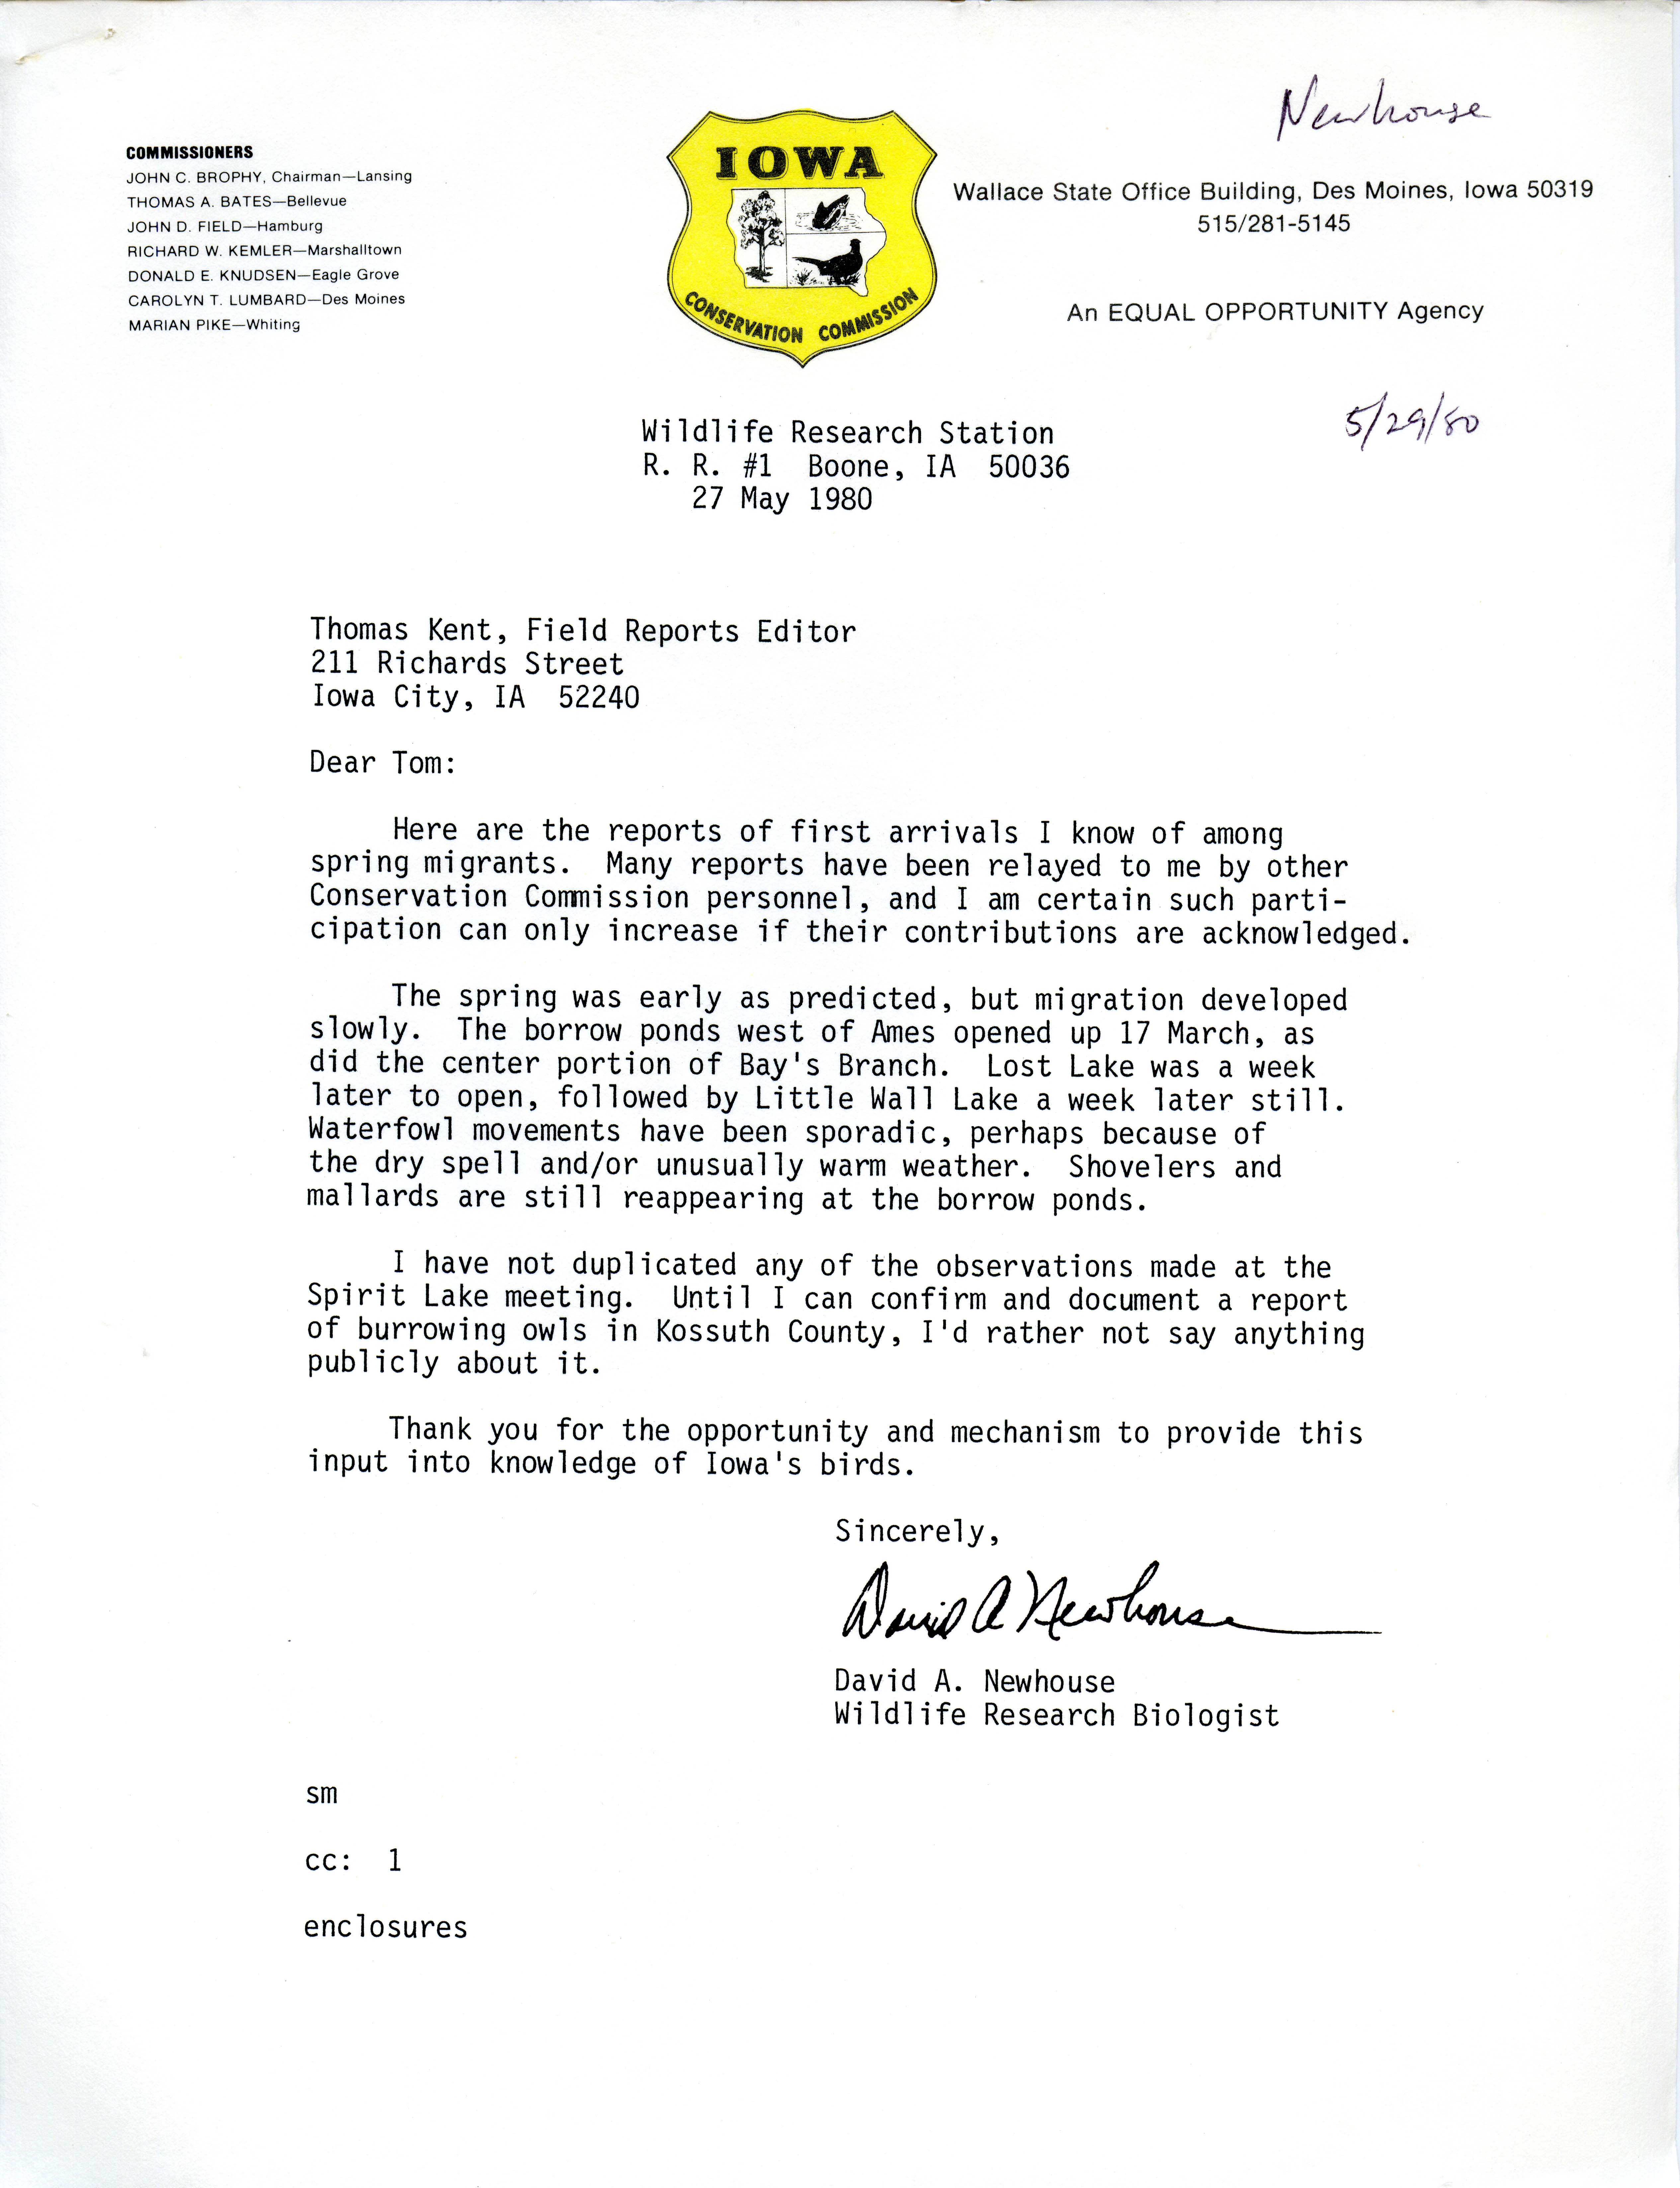 David A. Newhouse letter to Thomas H. Kent regarding bird sightings, May 27, 1980